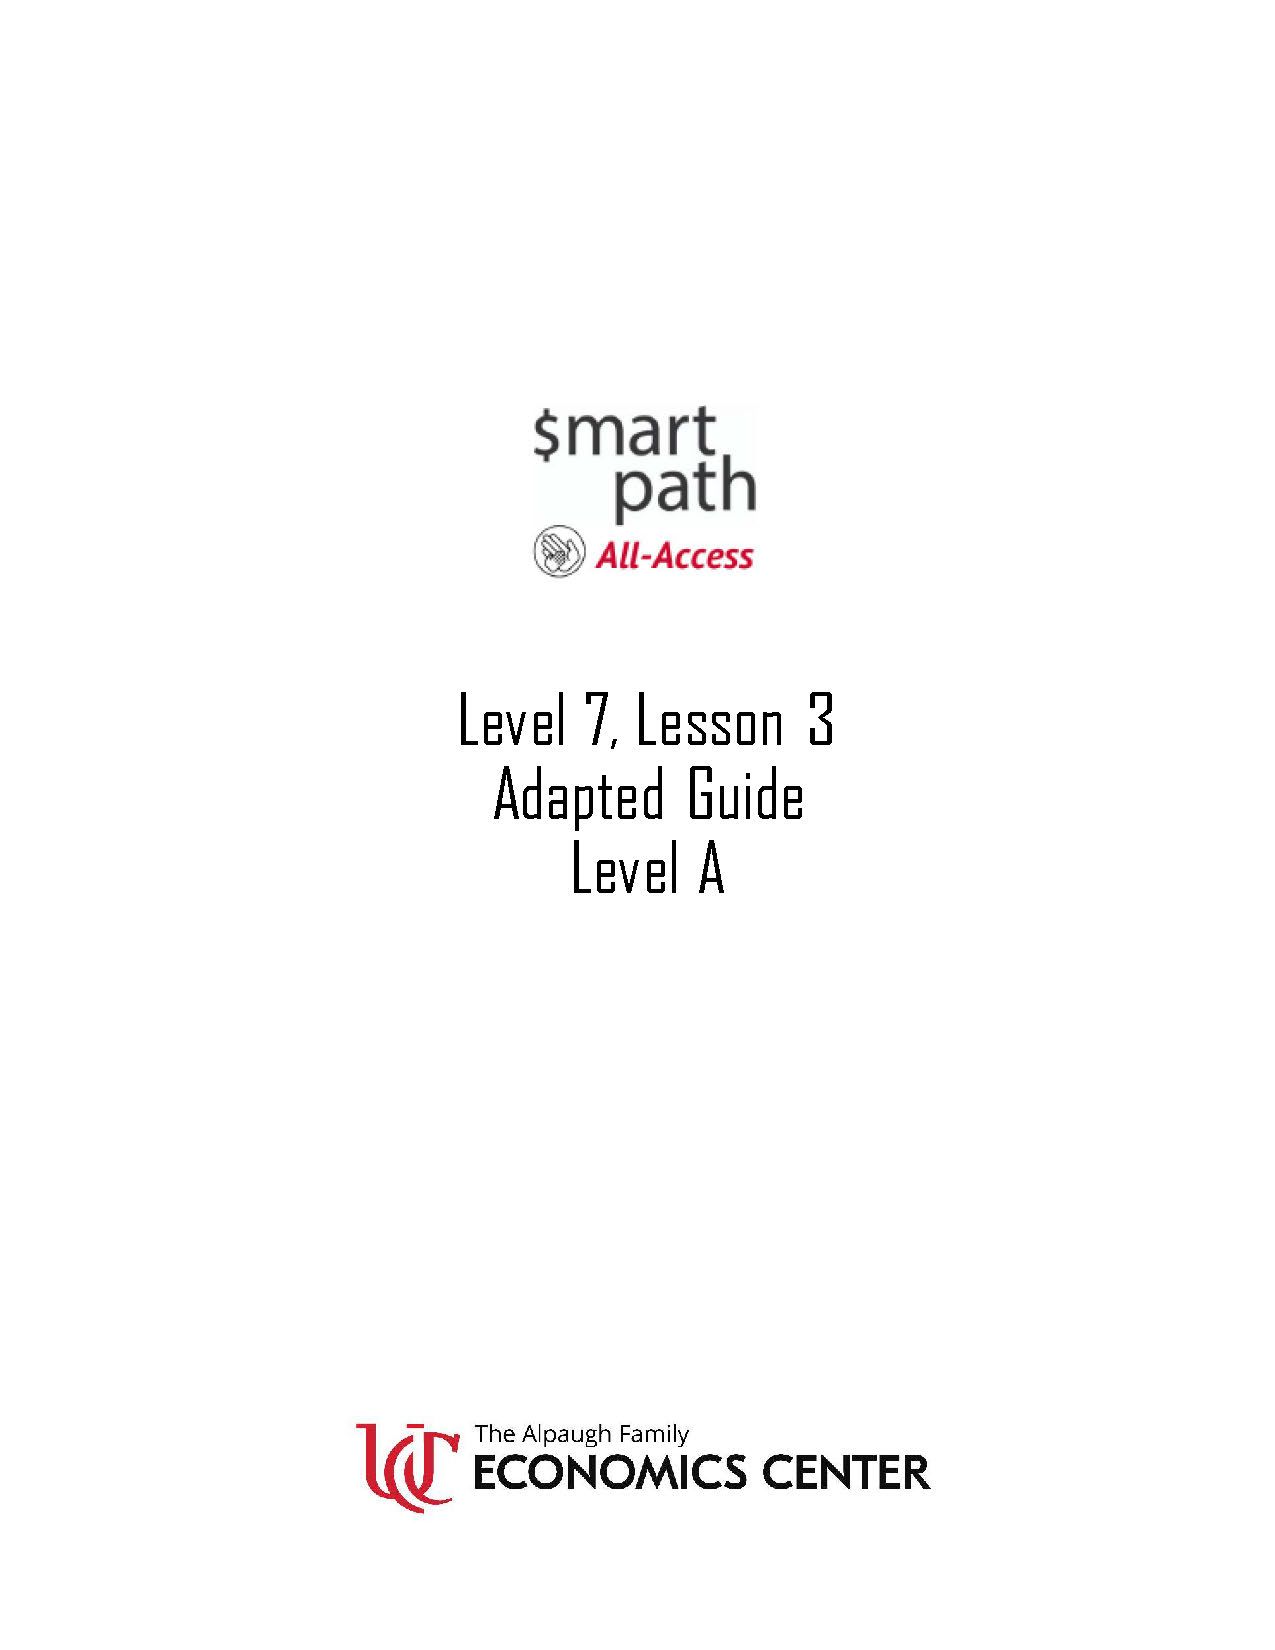 Level 7 Lesson 3 cover